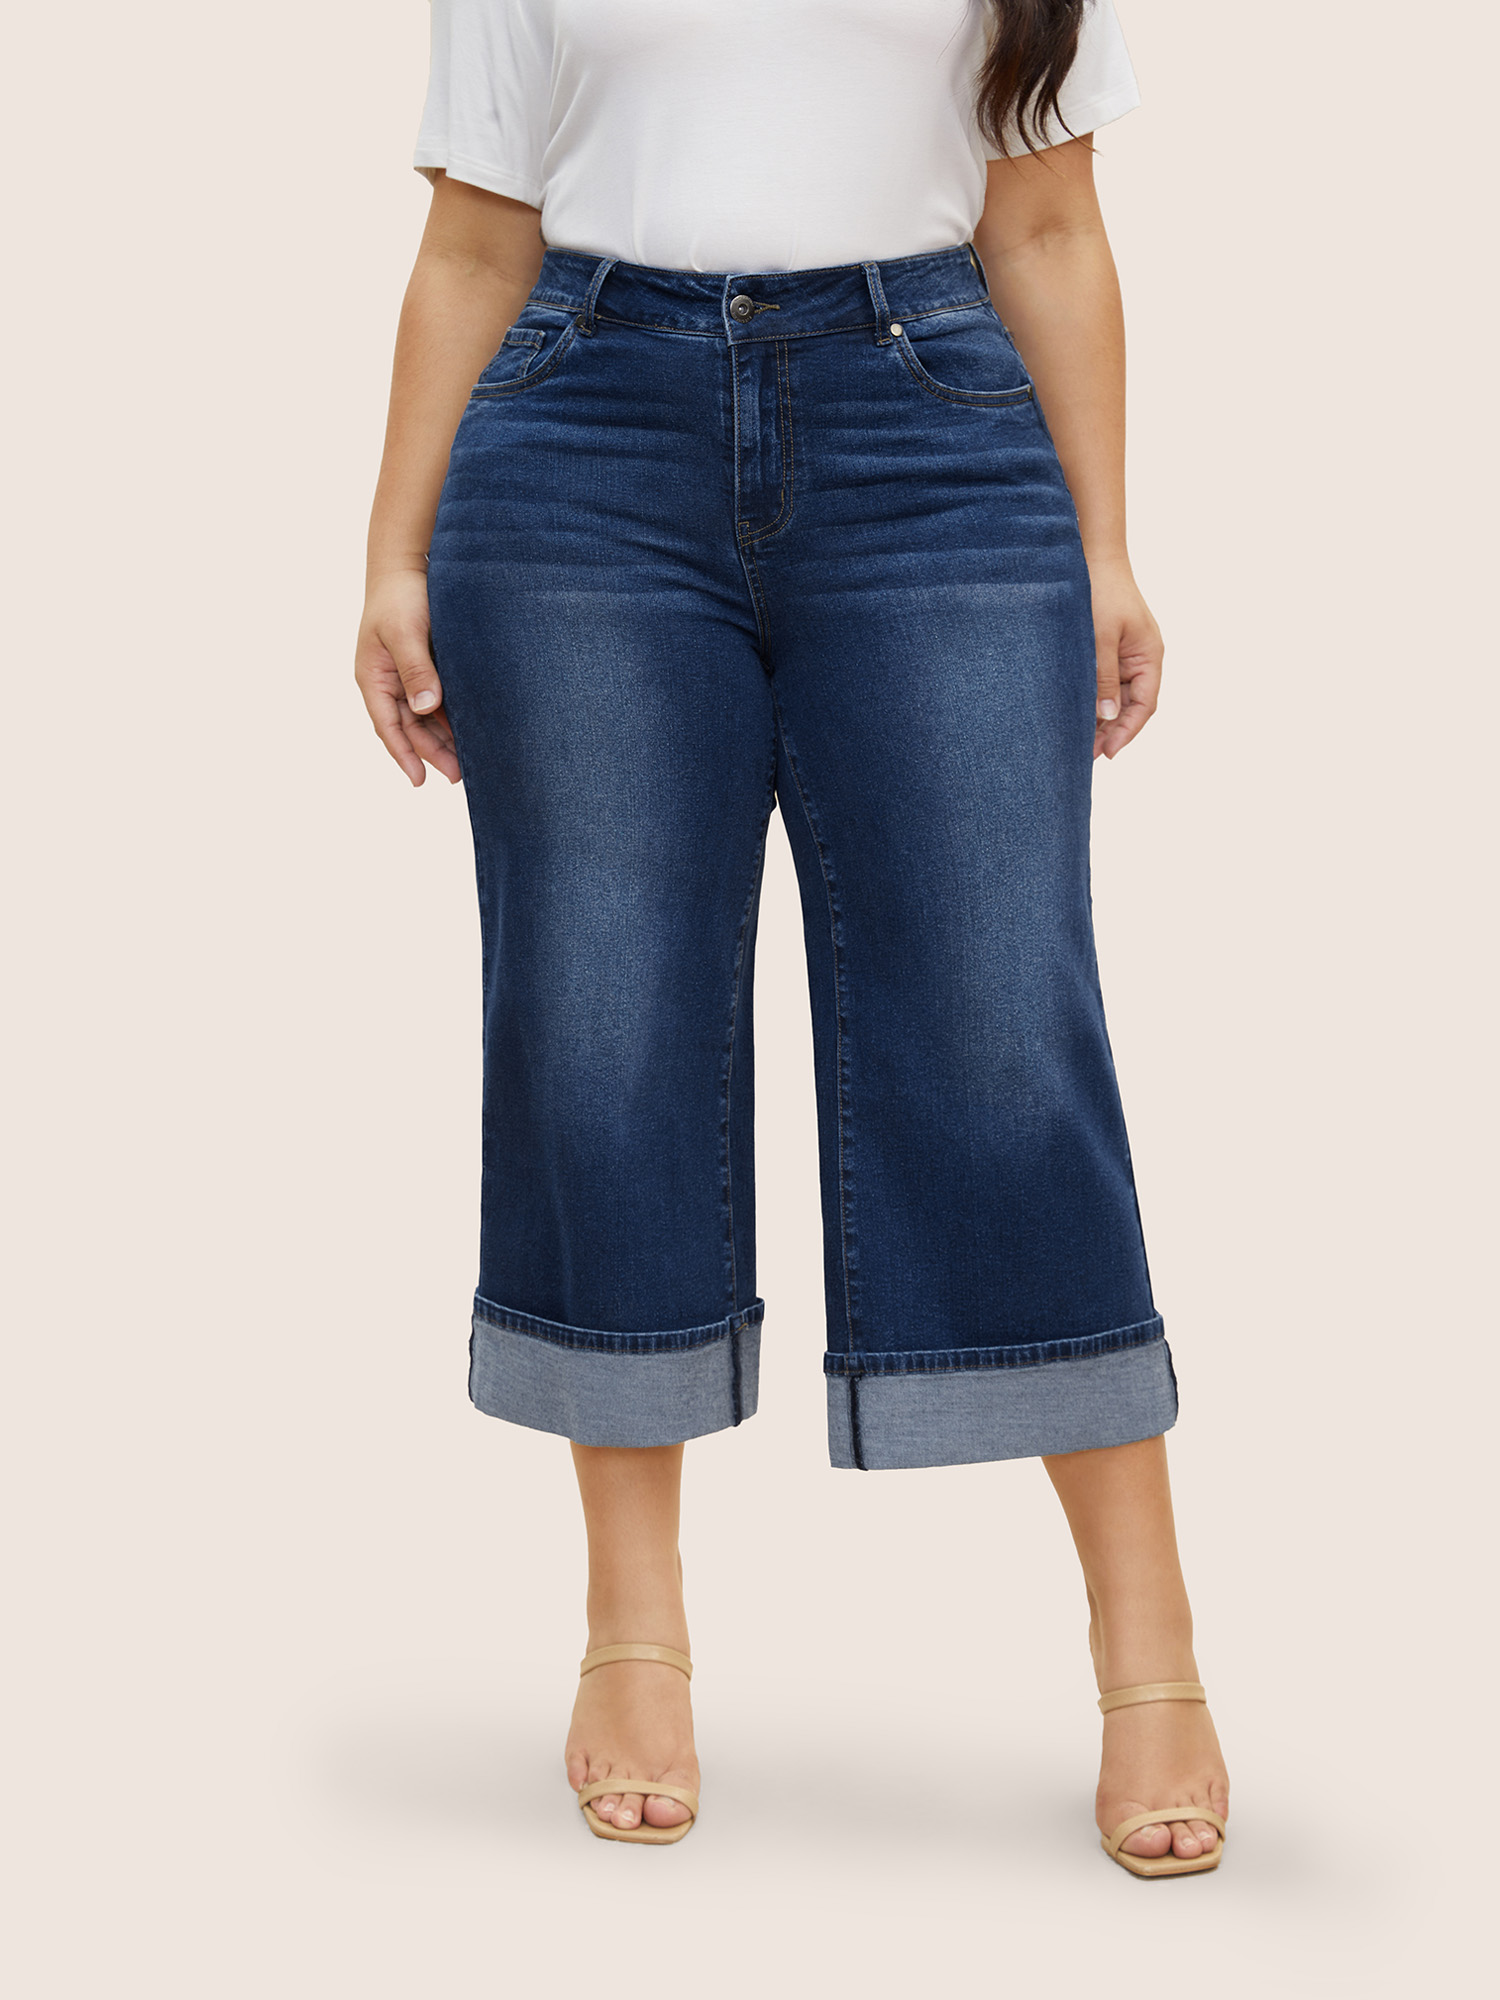 

Plus Size Dark Wash Roll Hem Cropped Wide Leg Jeans Women Denimblue Casual High stretch Slanted pocket Jeans BloomChic